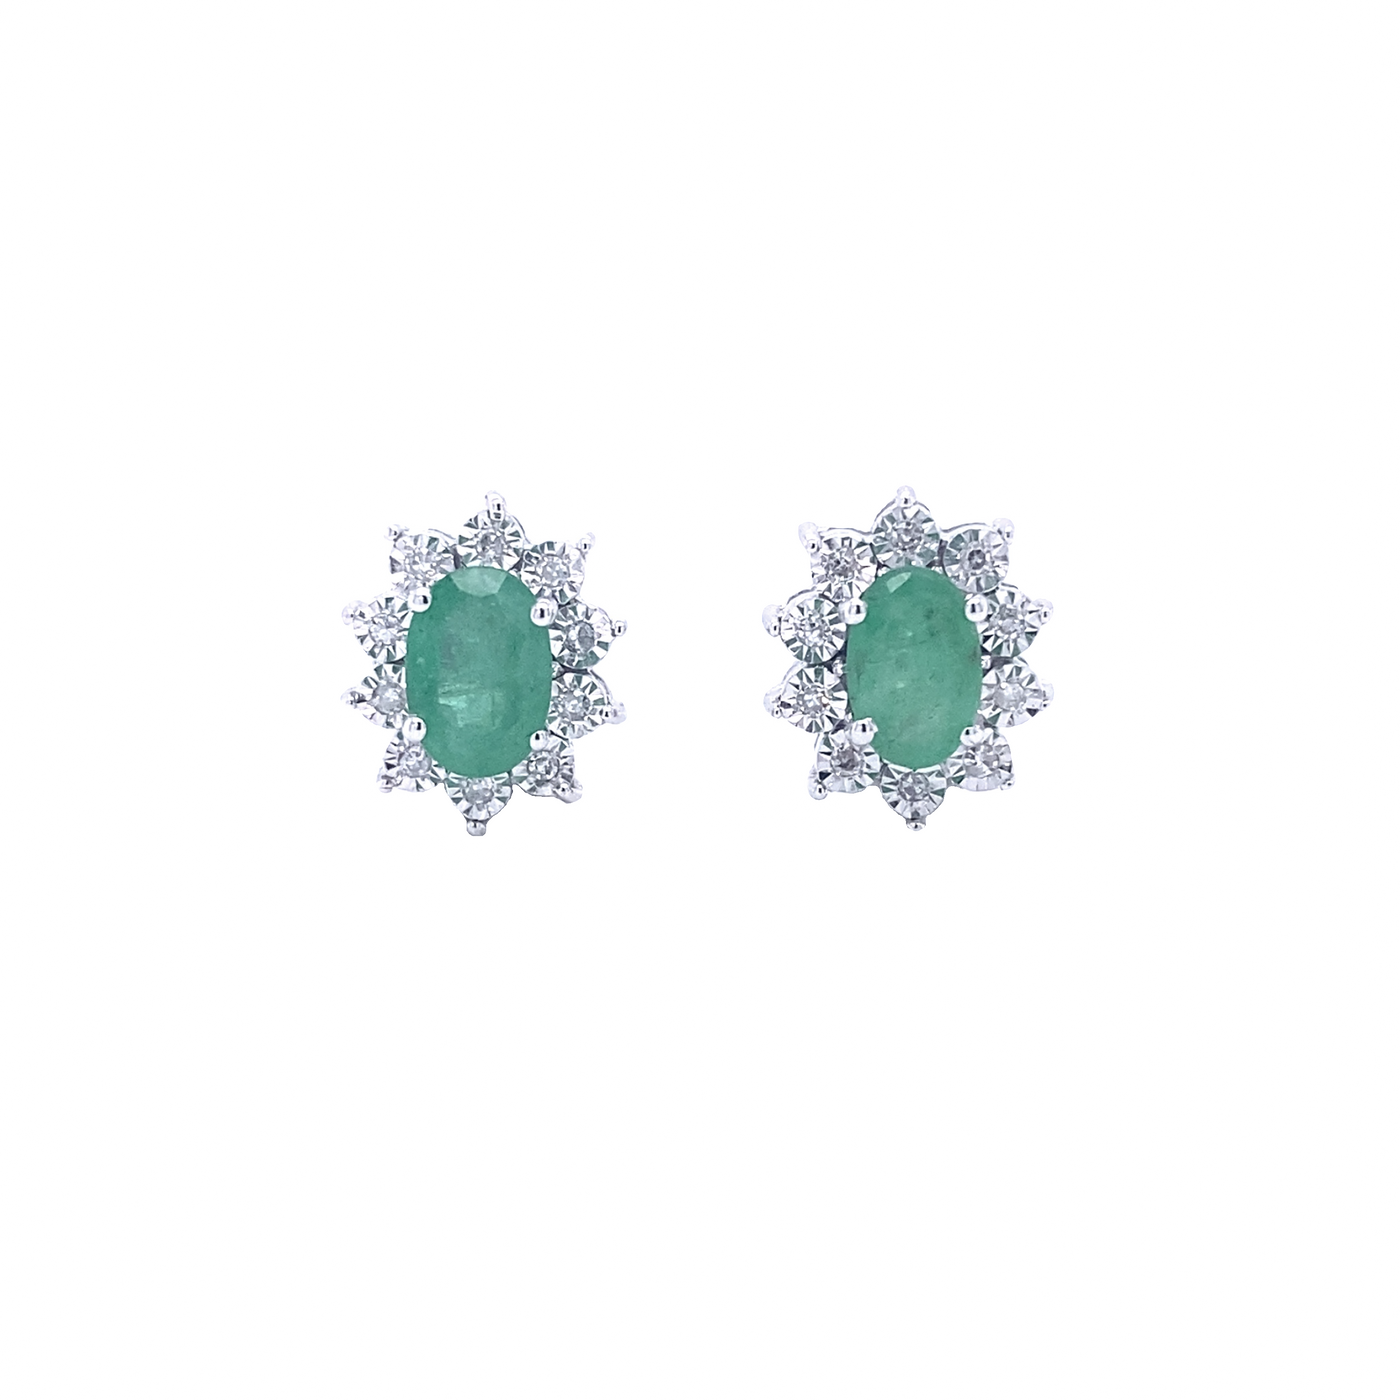 10 Karat White Gold Emerald and Diamond Earrings